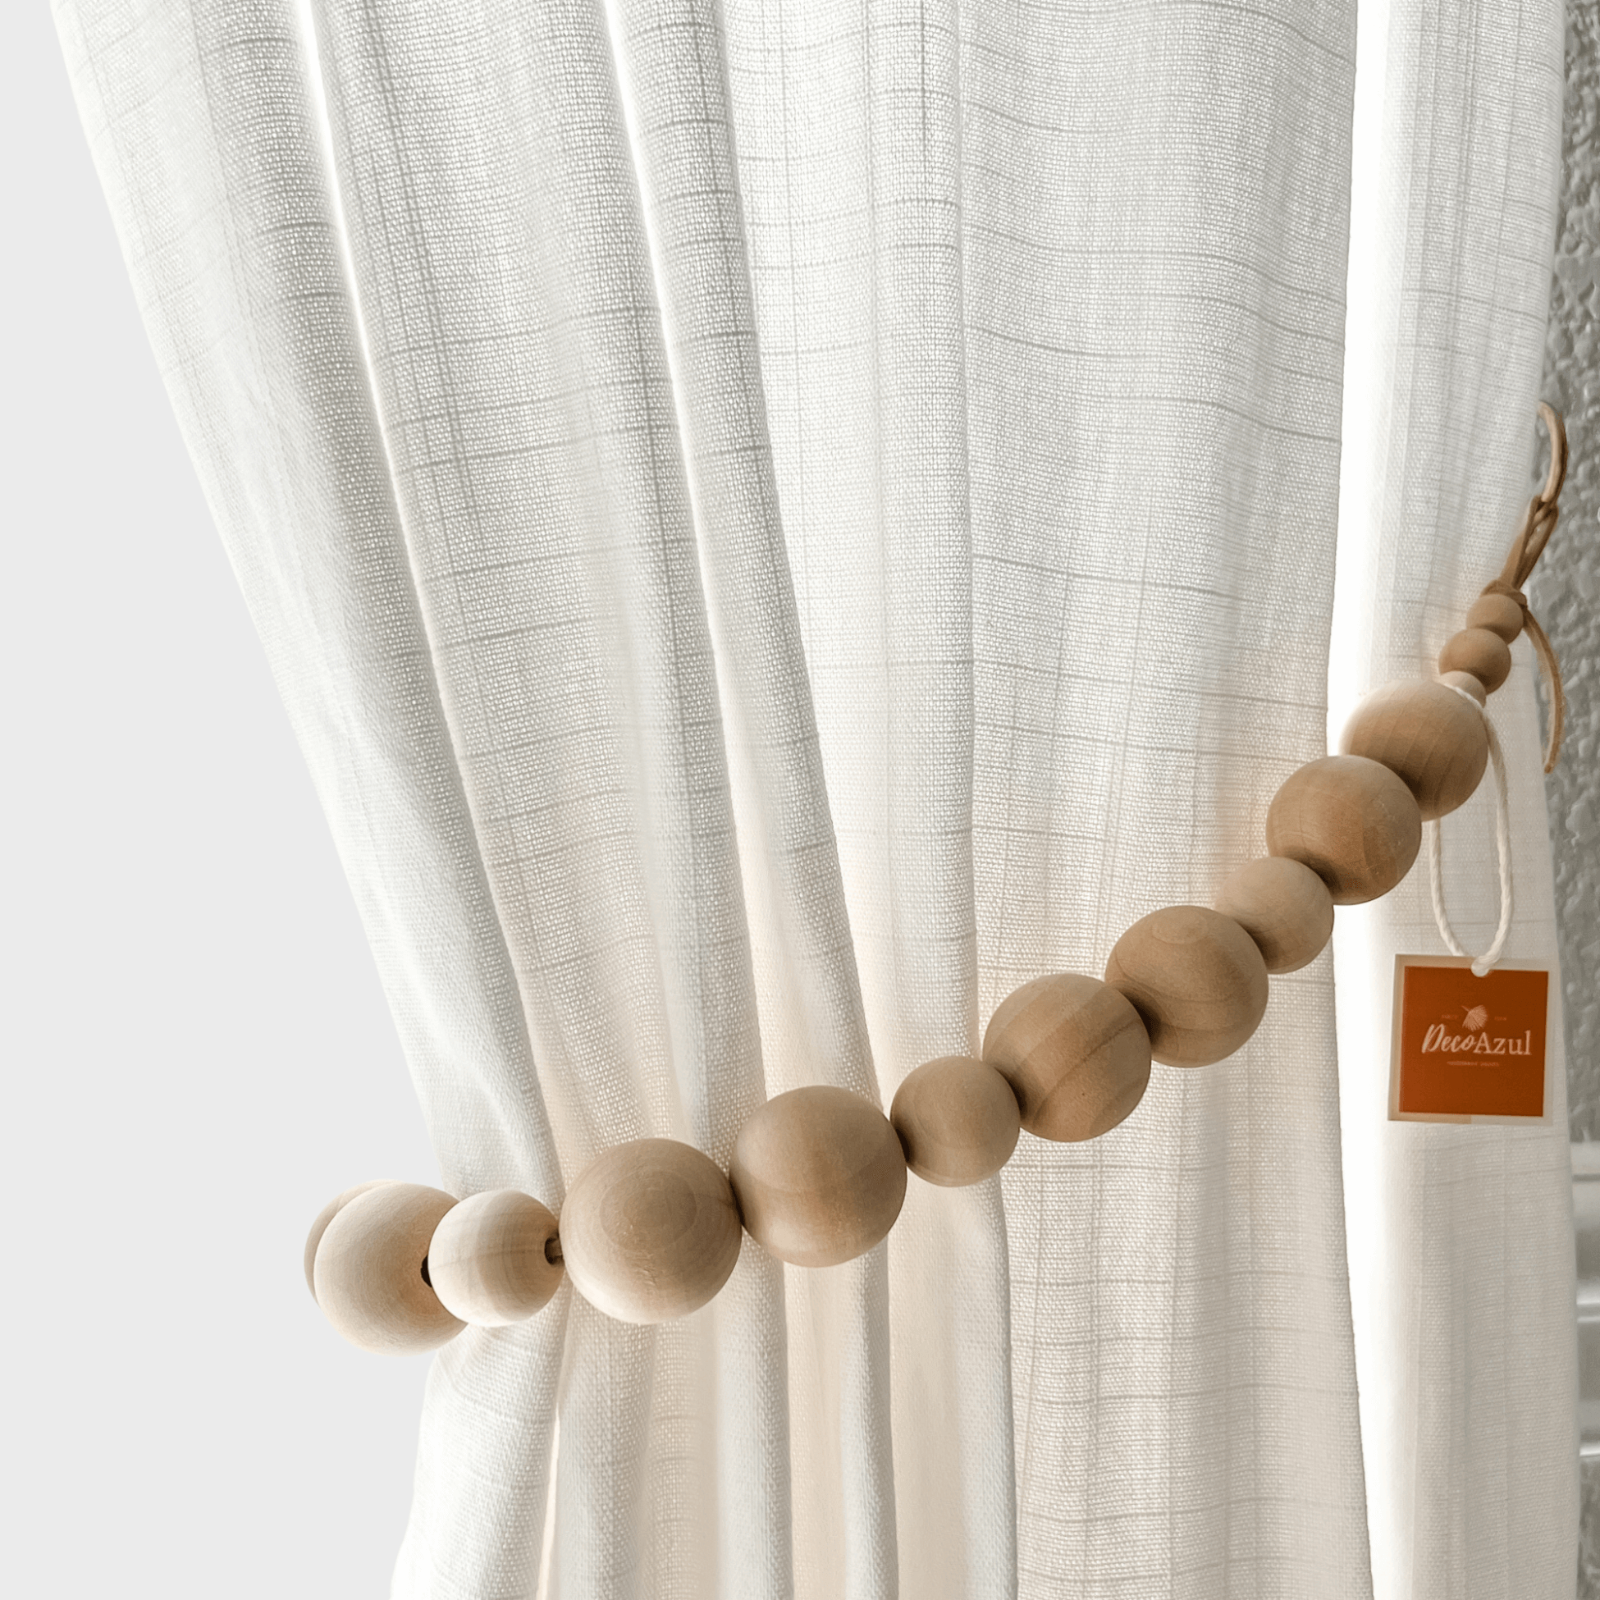 Alzapaños para cortinas, Sujetadores de cortinas, madera natural